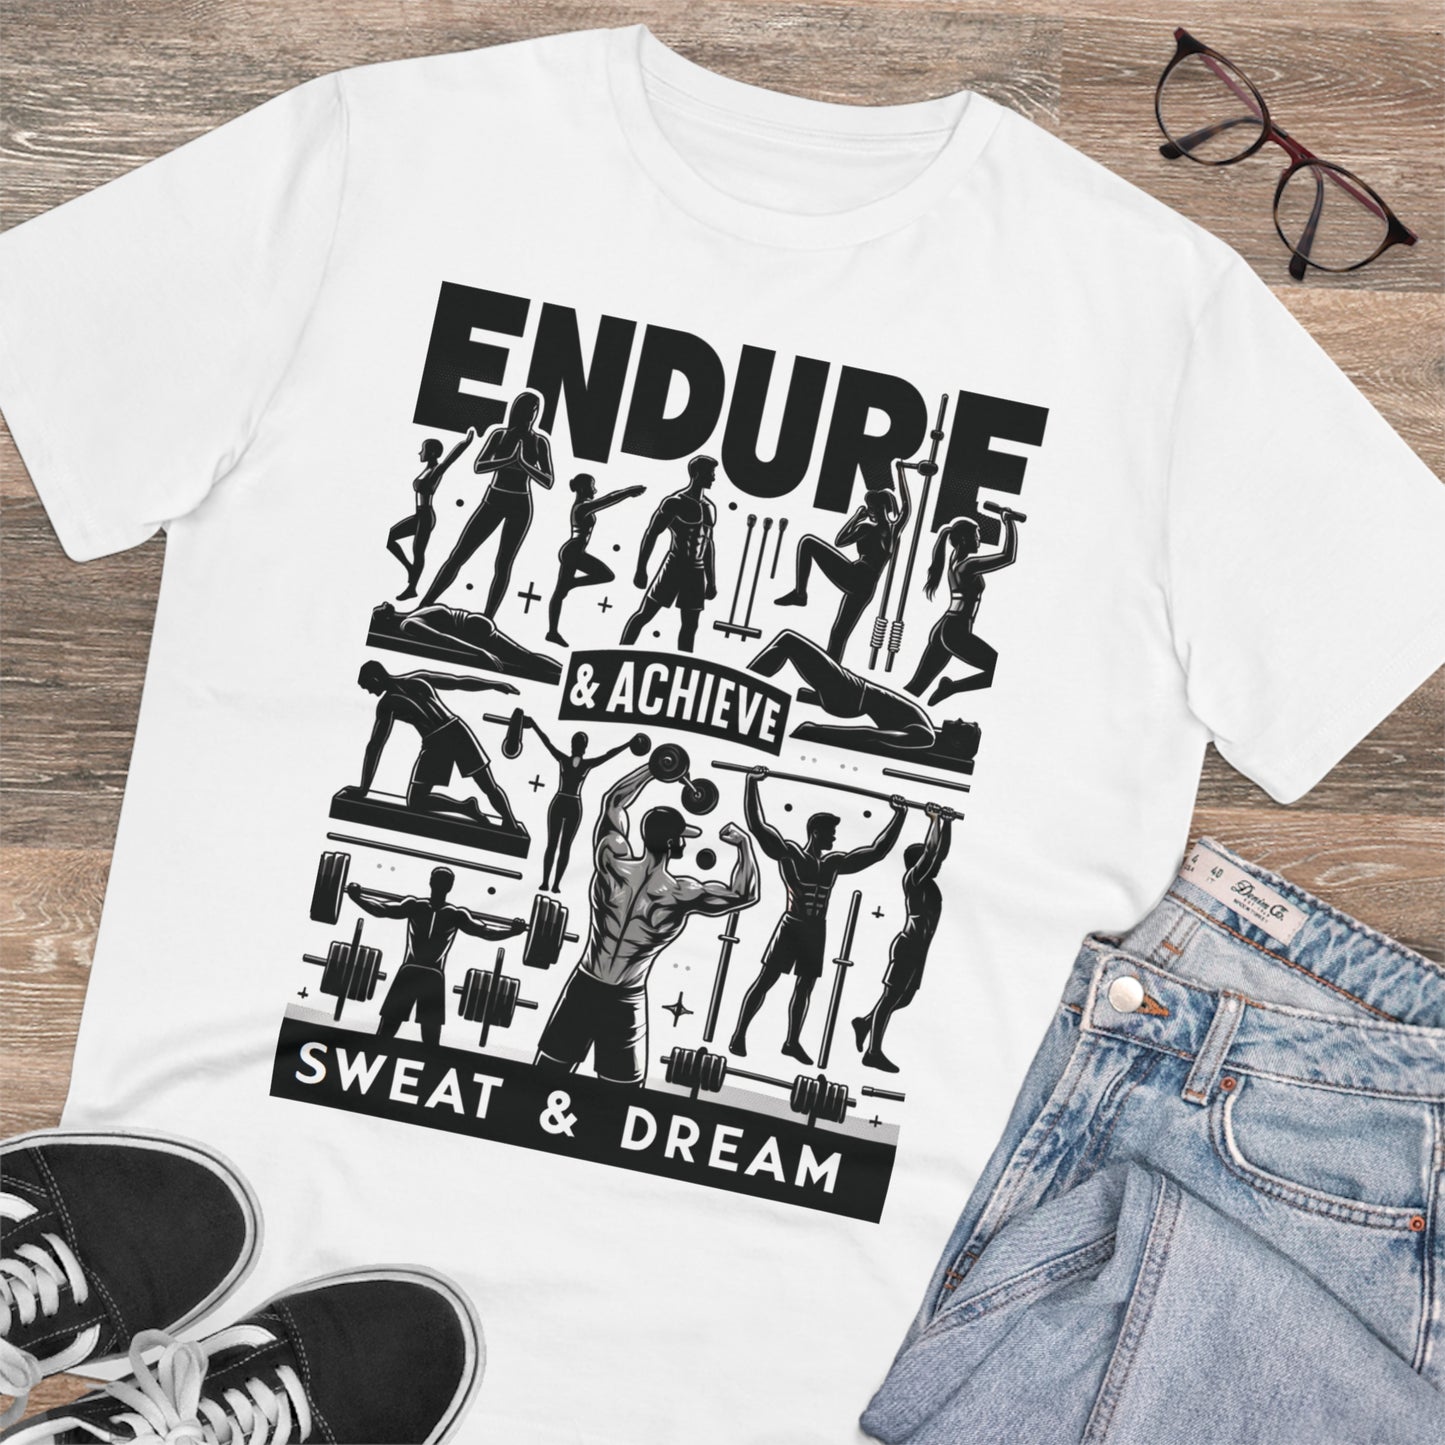 Resilience Rally Tee "ENDURE ACHIEVE SWEAT & DREAM" T-shirt - Unisex